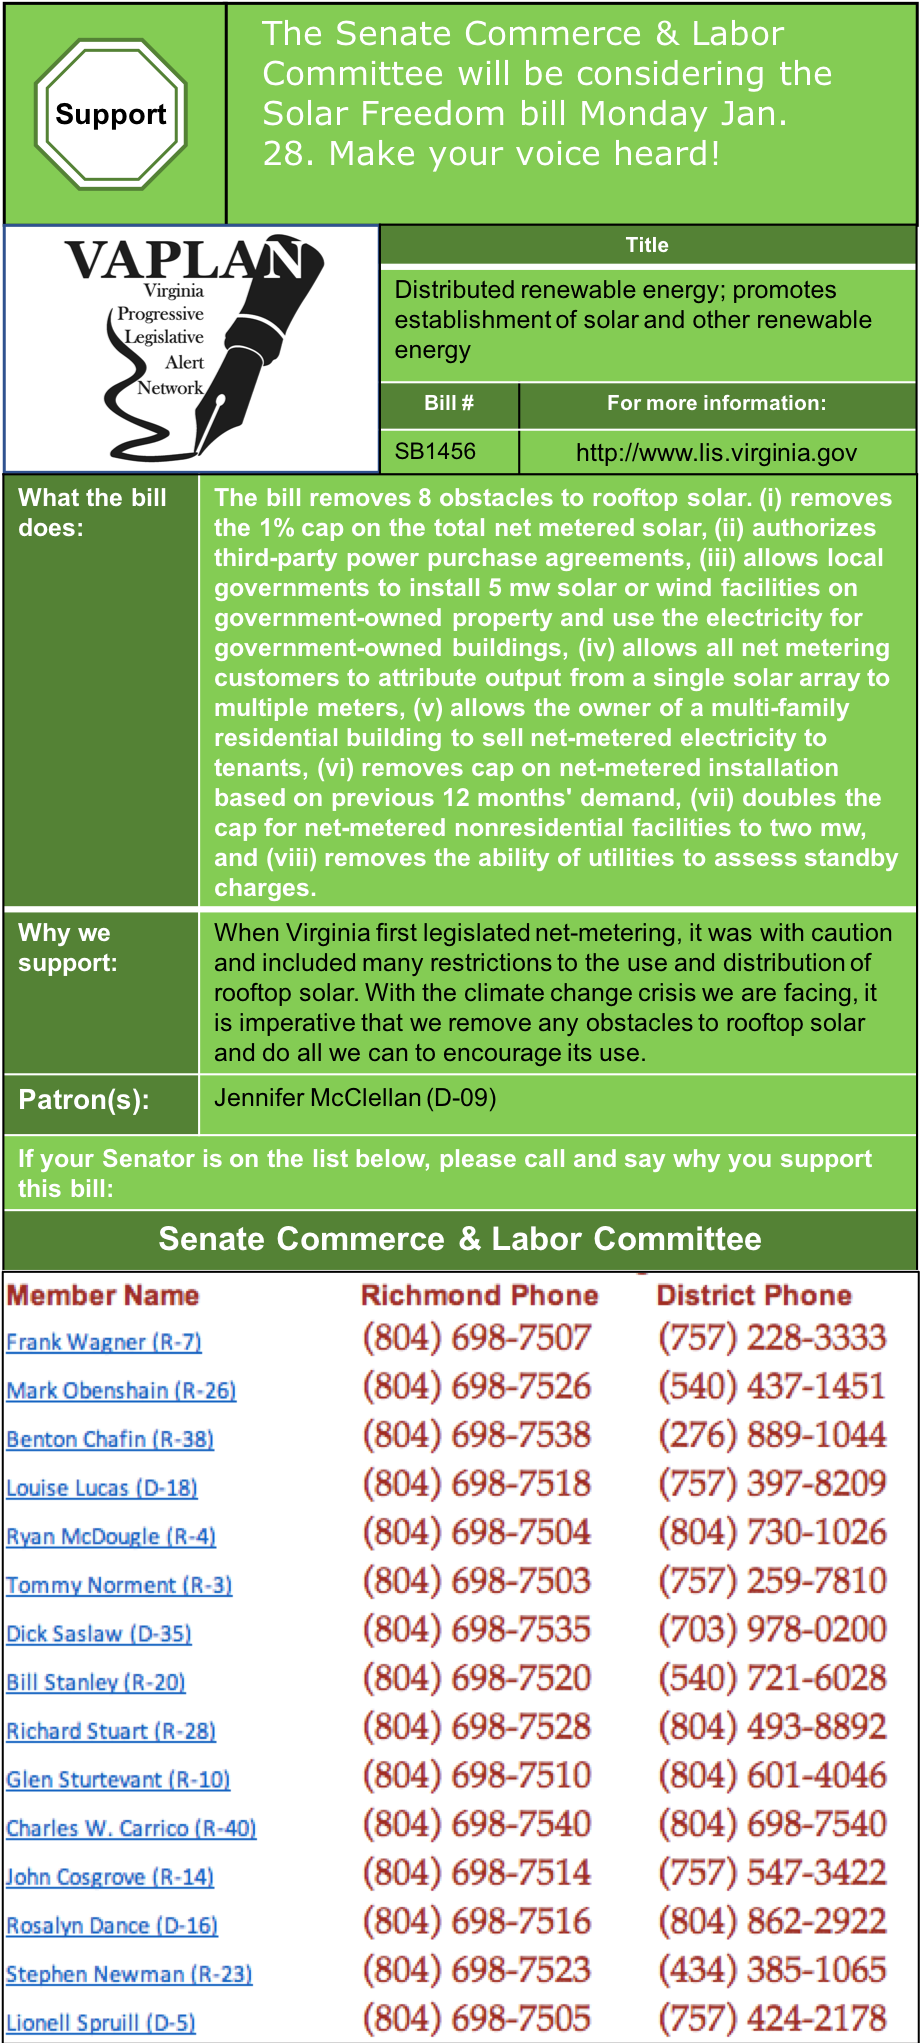 ALERT: Senate Commerce & Labor to consider Solar Freedom bill, Monday Jan. 28.